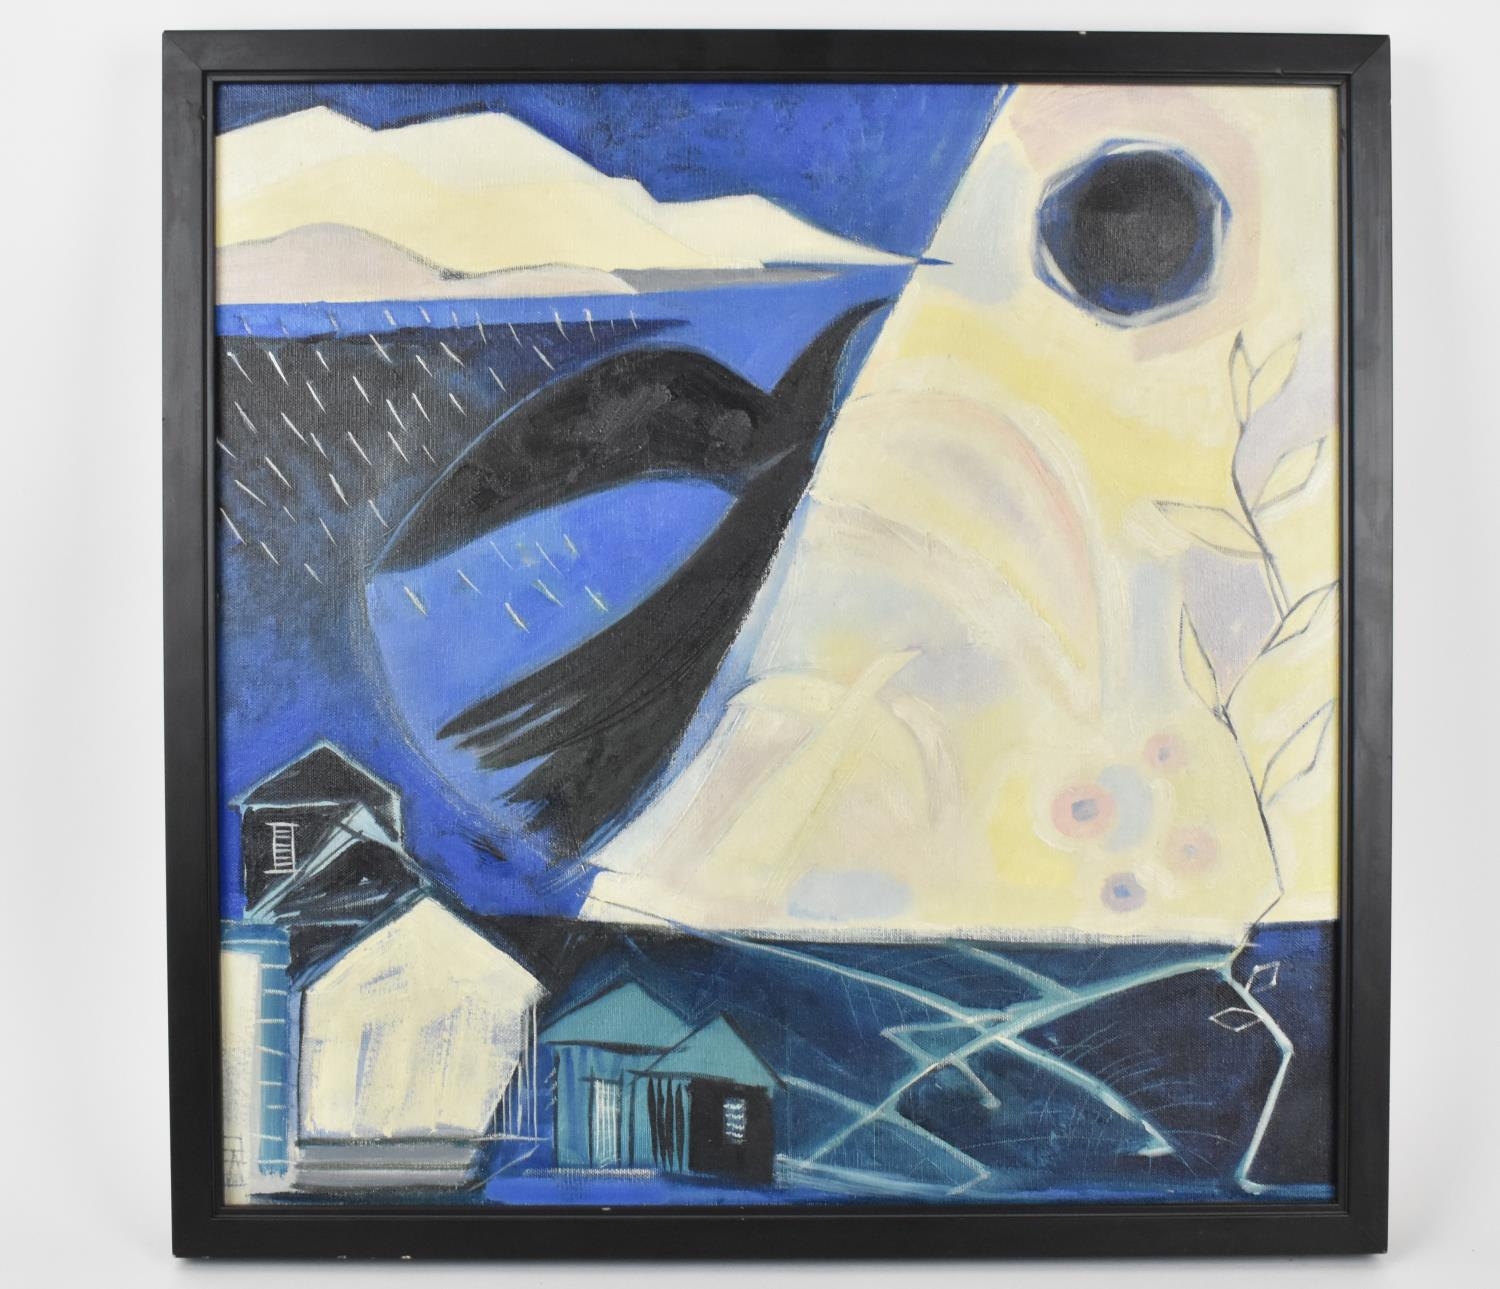 Eve Aspinwall (b. 1951) American modernist style painting 'Blackbird', depicting a night scene